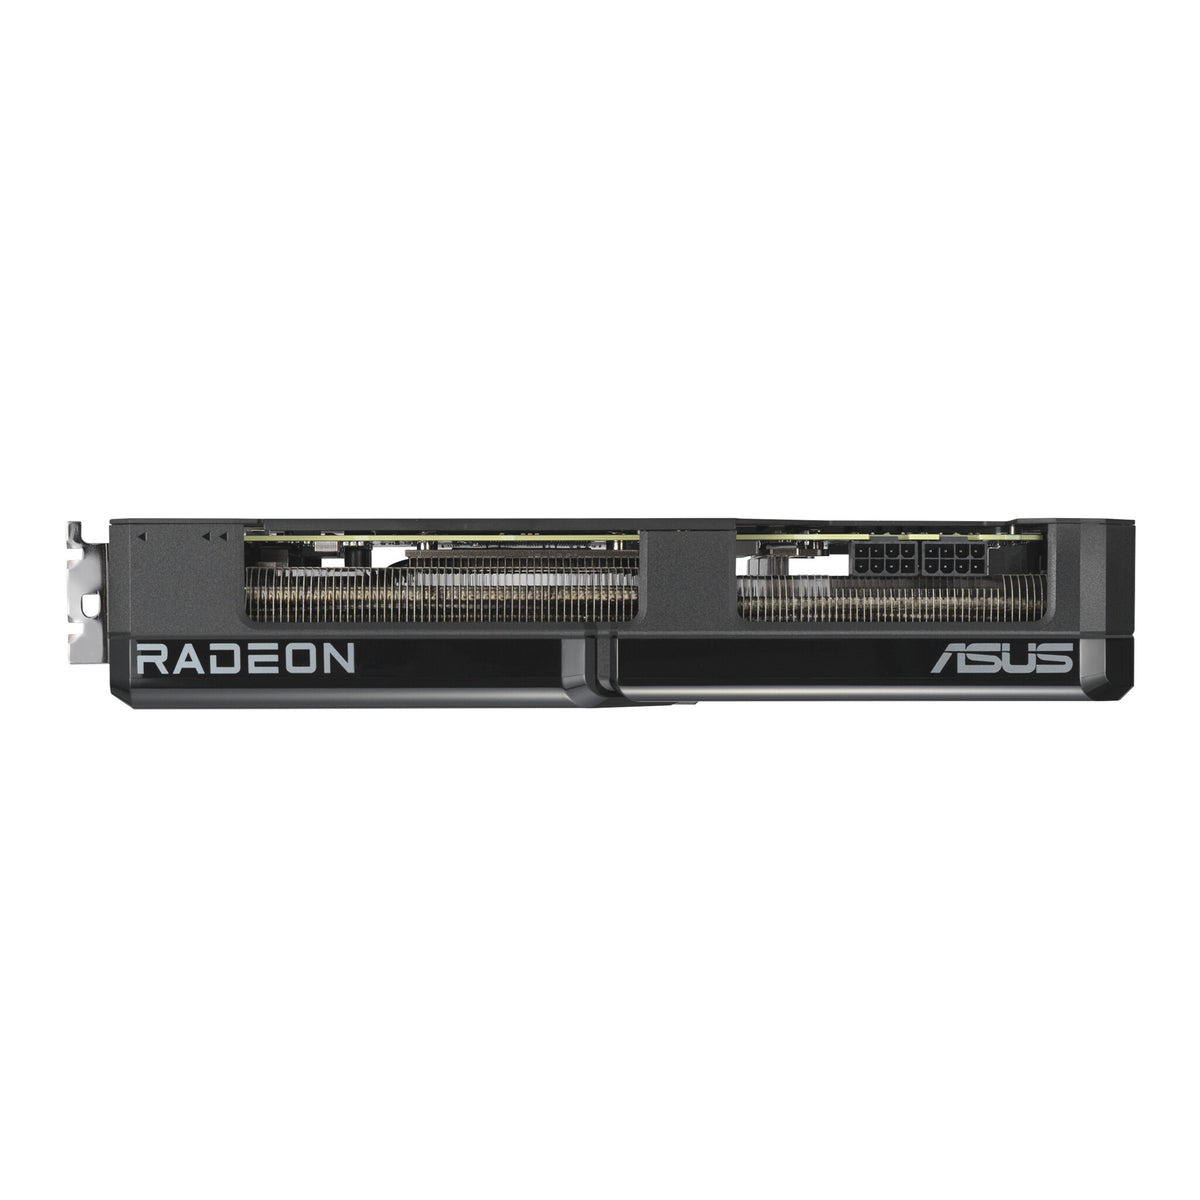 ASUS Dual - AMD 16 GB GDDR6 Radeon RX 7900 GRE graphics card